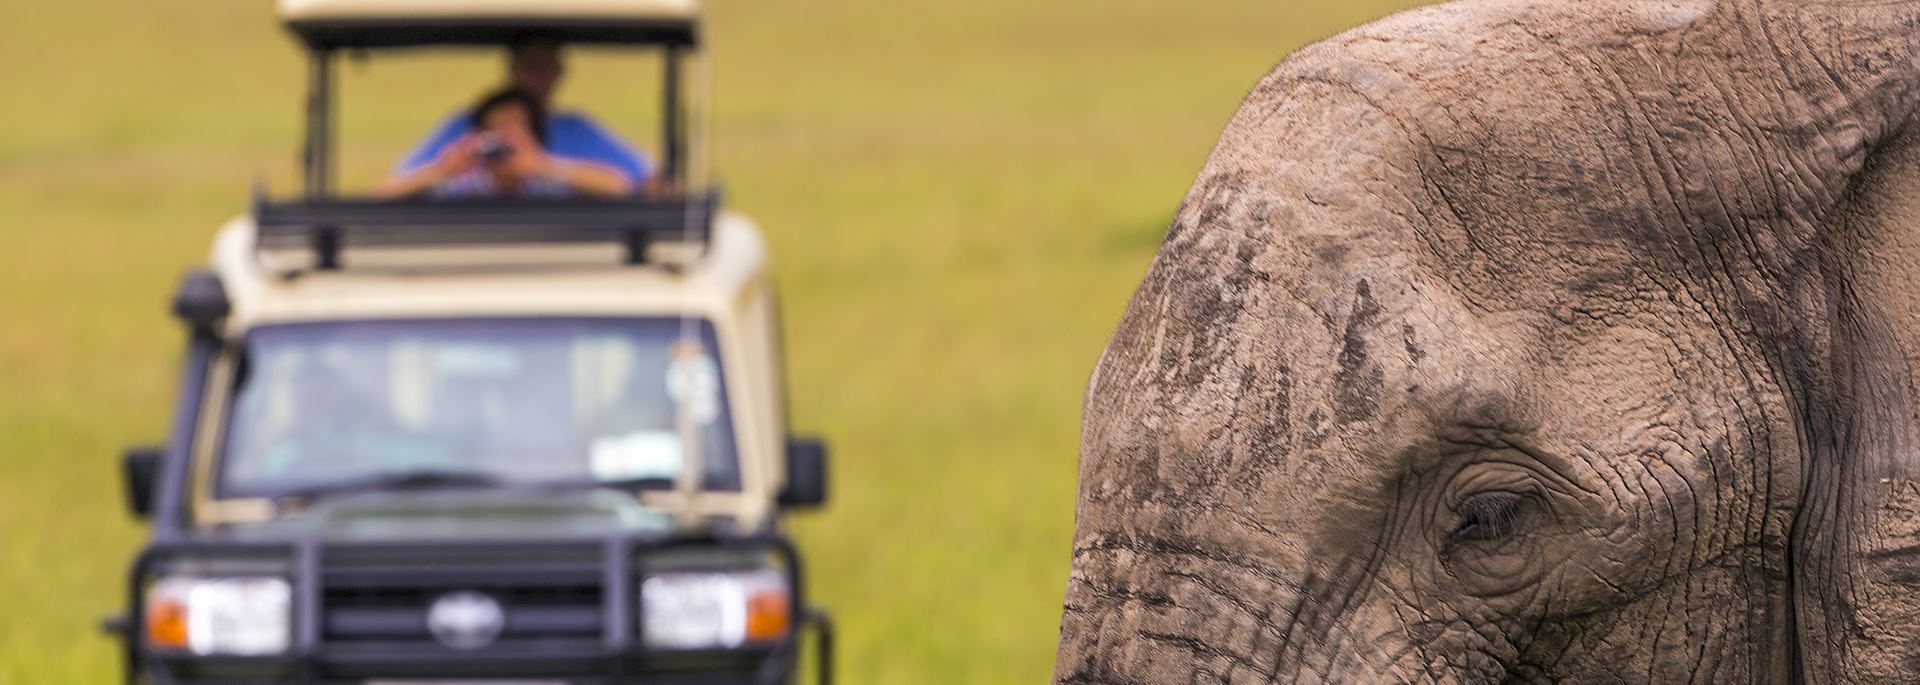 Getting close to the elephant, Kenya